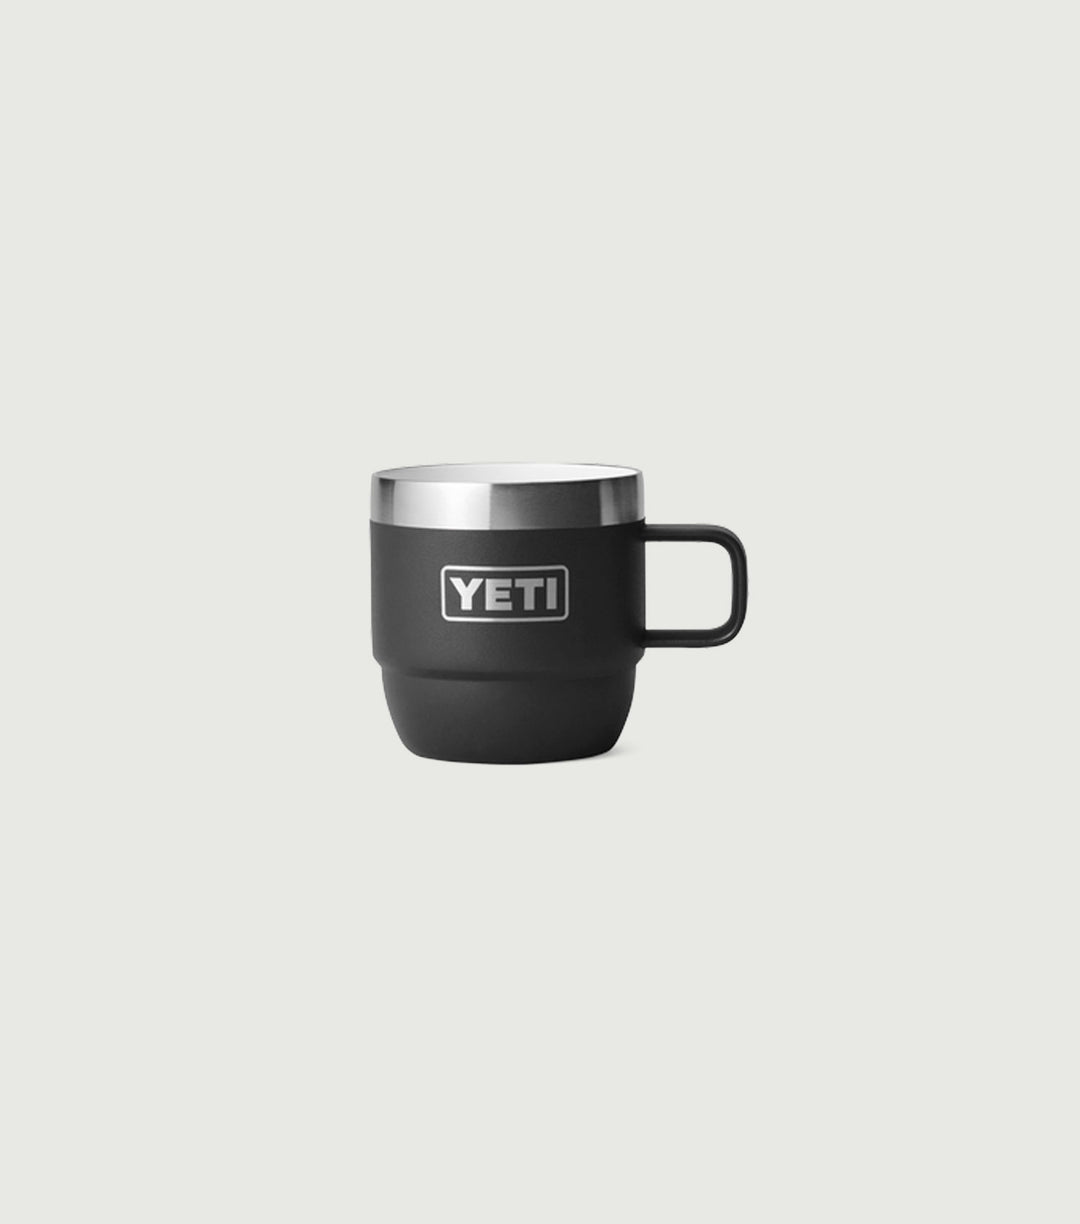 Espresso Mug 2 Black - Yeti